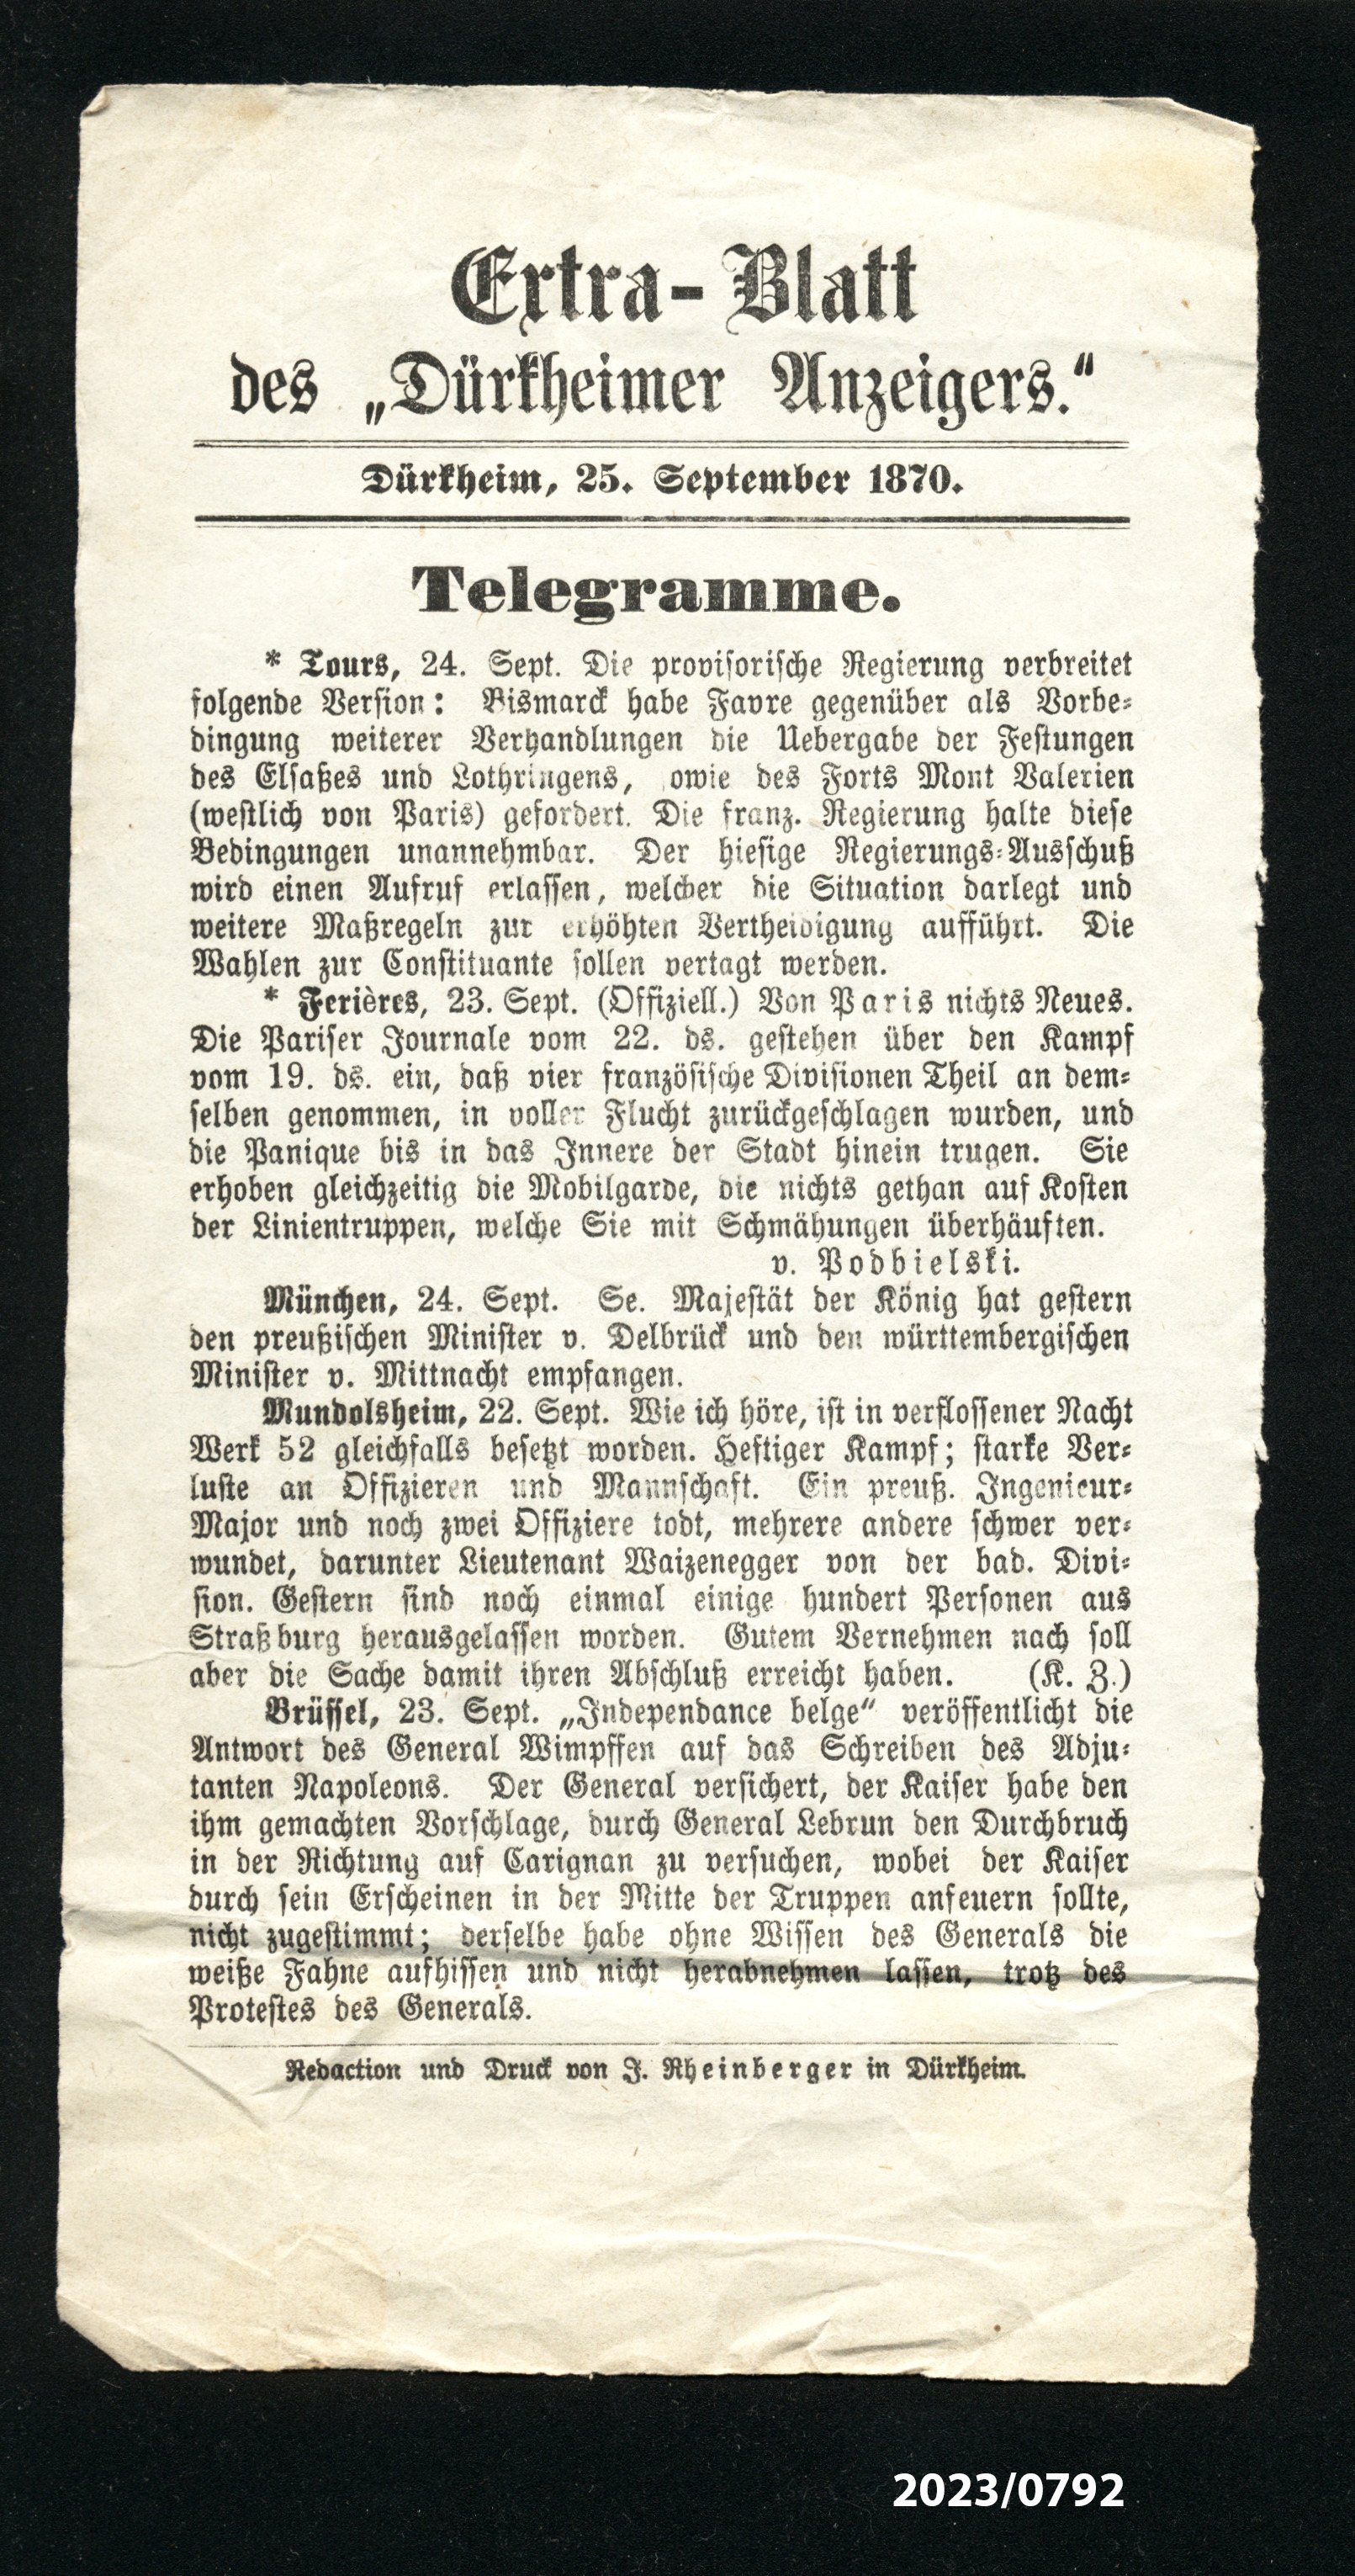 Extra-Blatt des "Dürkheimer Anzeigers". 25.9.1870 (Stadtmuseum Bad Dürkheim im Kulturzentrum Haus Catoir CC BY-NC-SA)